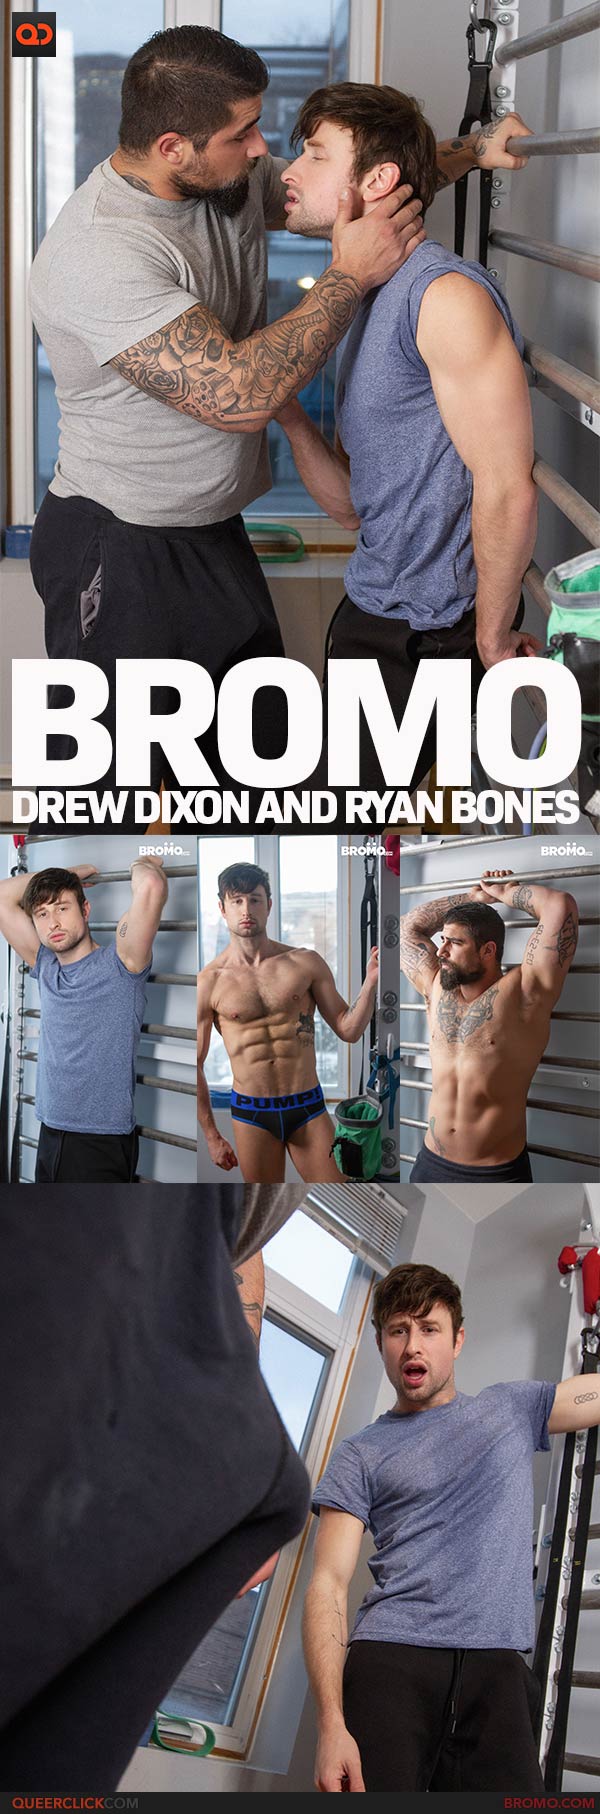 Bromo: Drew Dixon and Ryan Bones